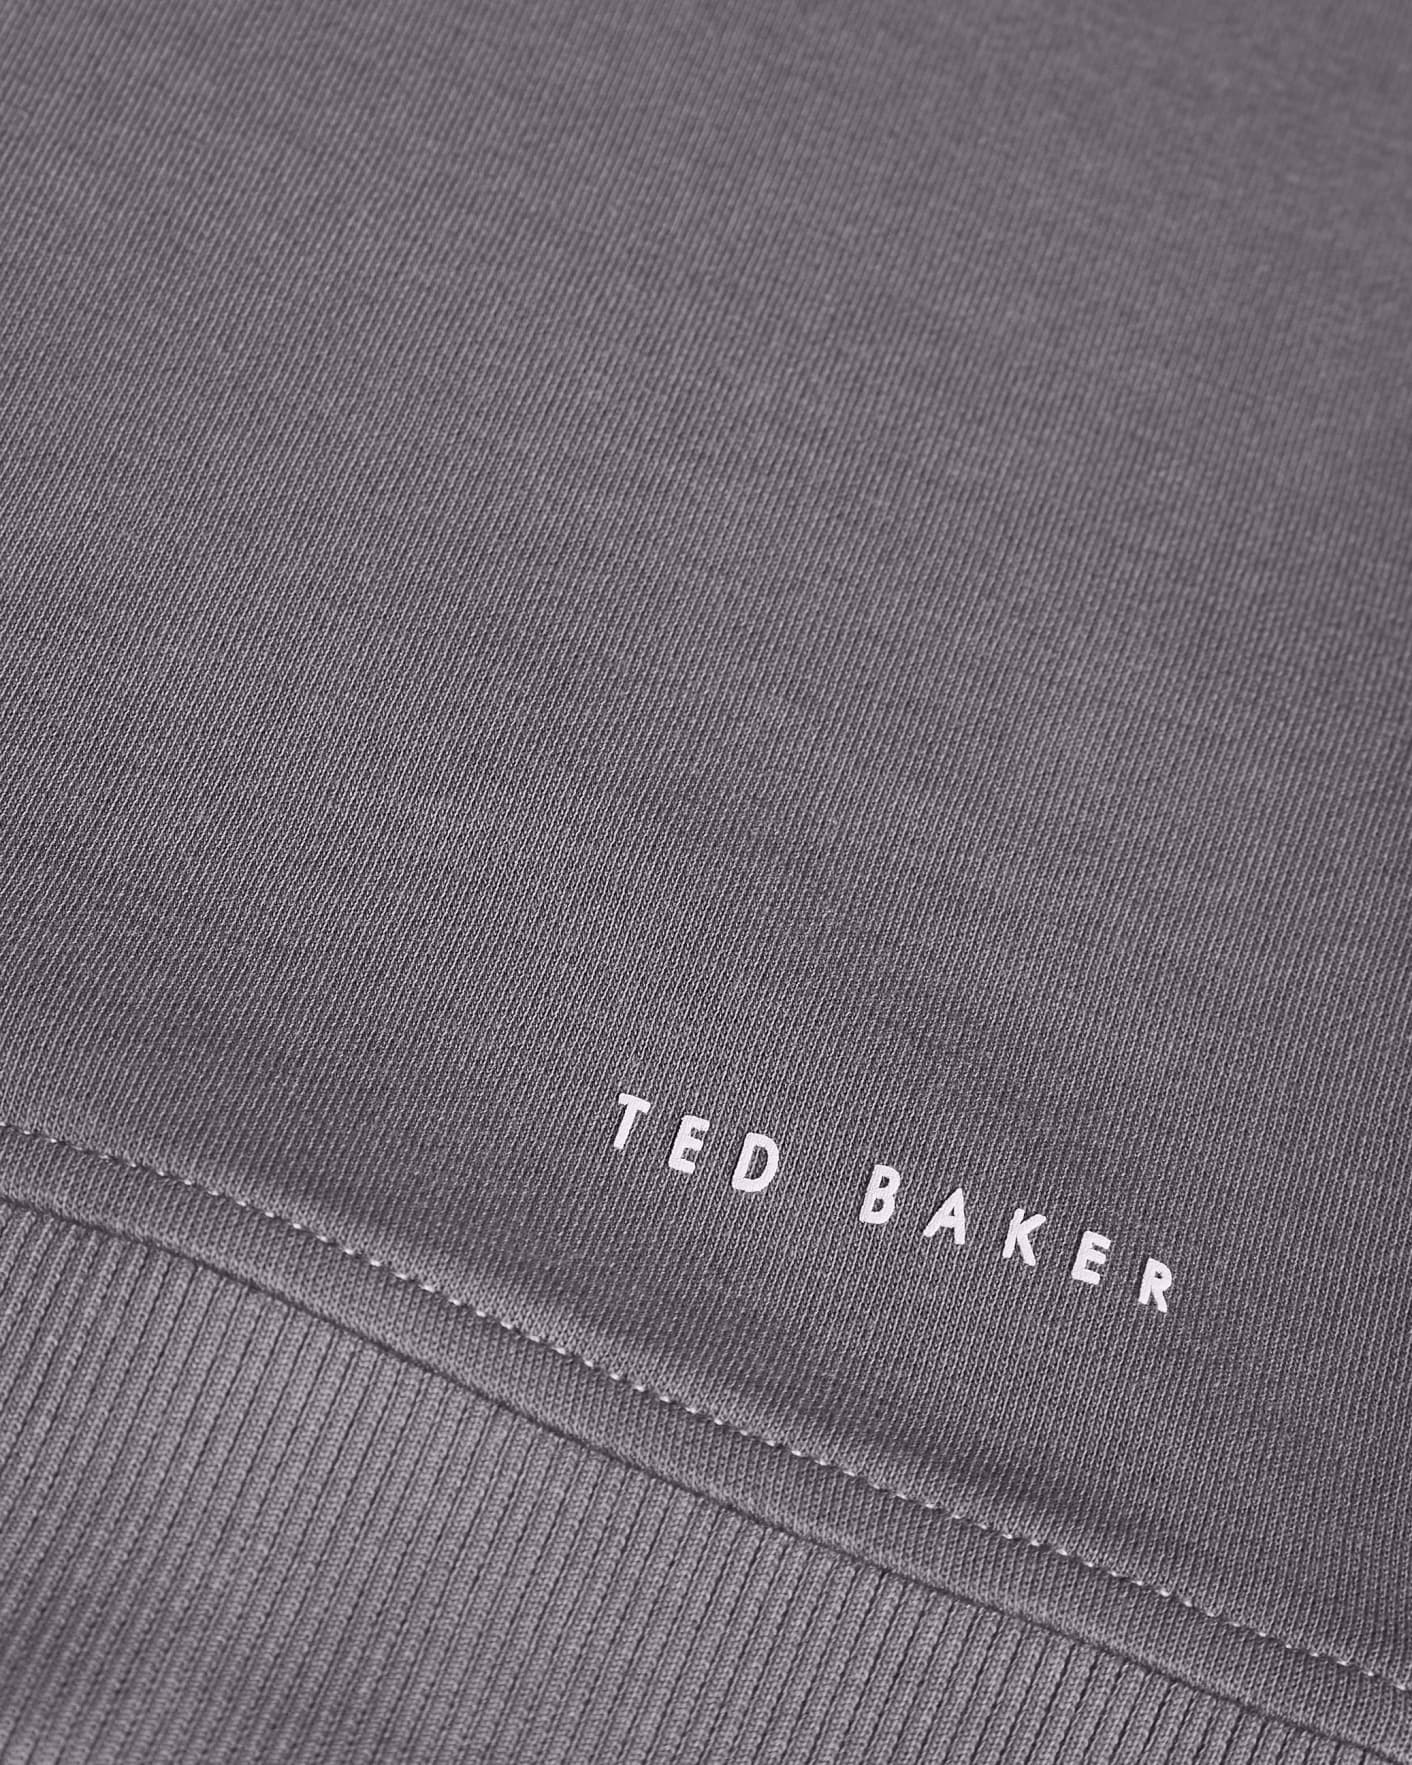 CHARCOAL Long Sleeve Half Zip Funnel Neck Ted Baker